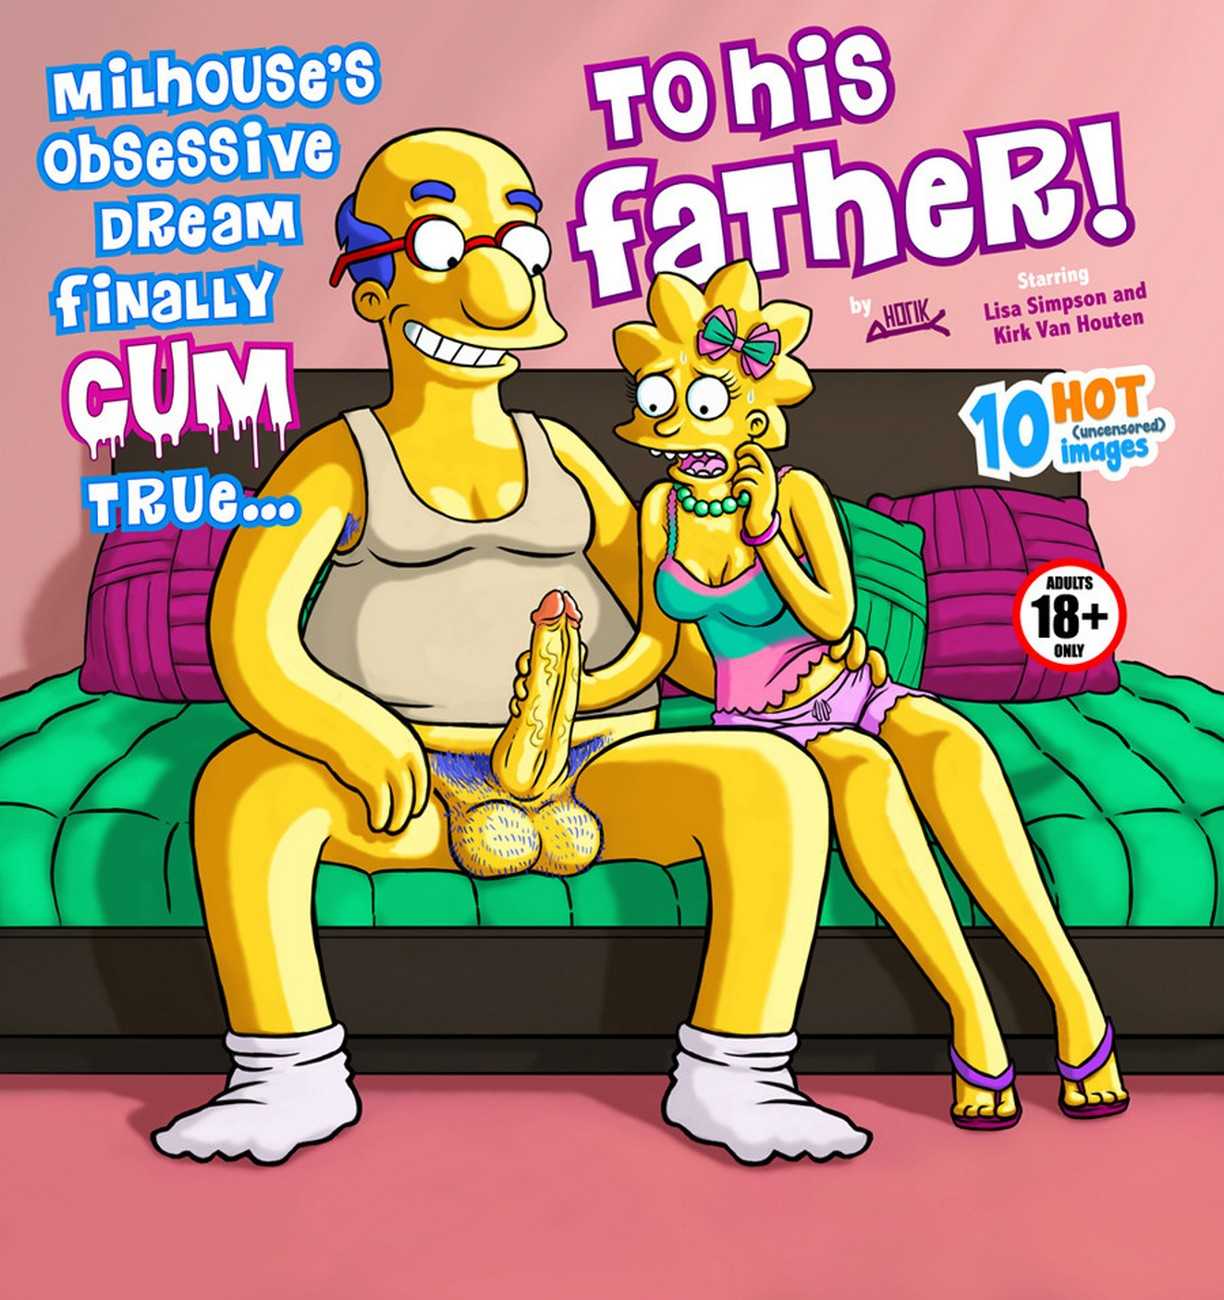 Milhouse's Obsessive Dream Finally Cum True His Father page 1